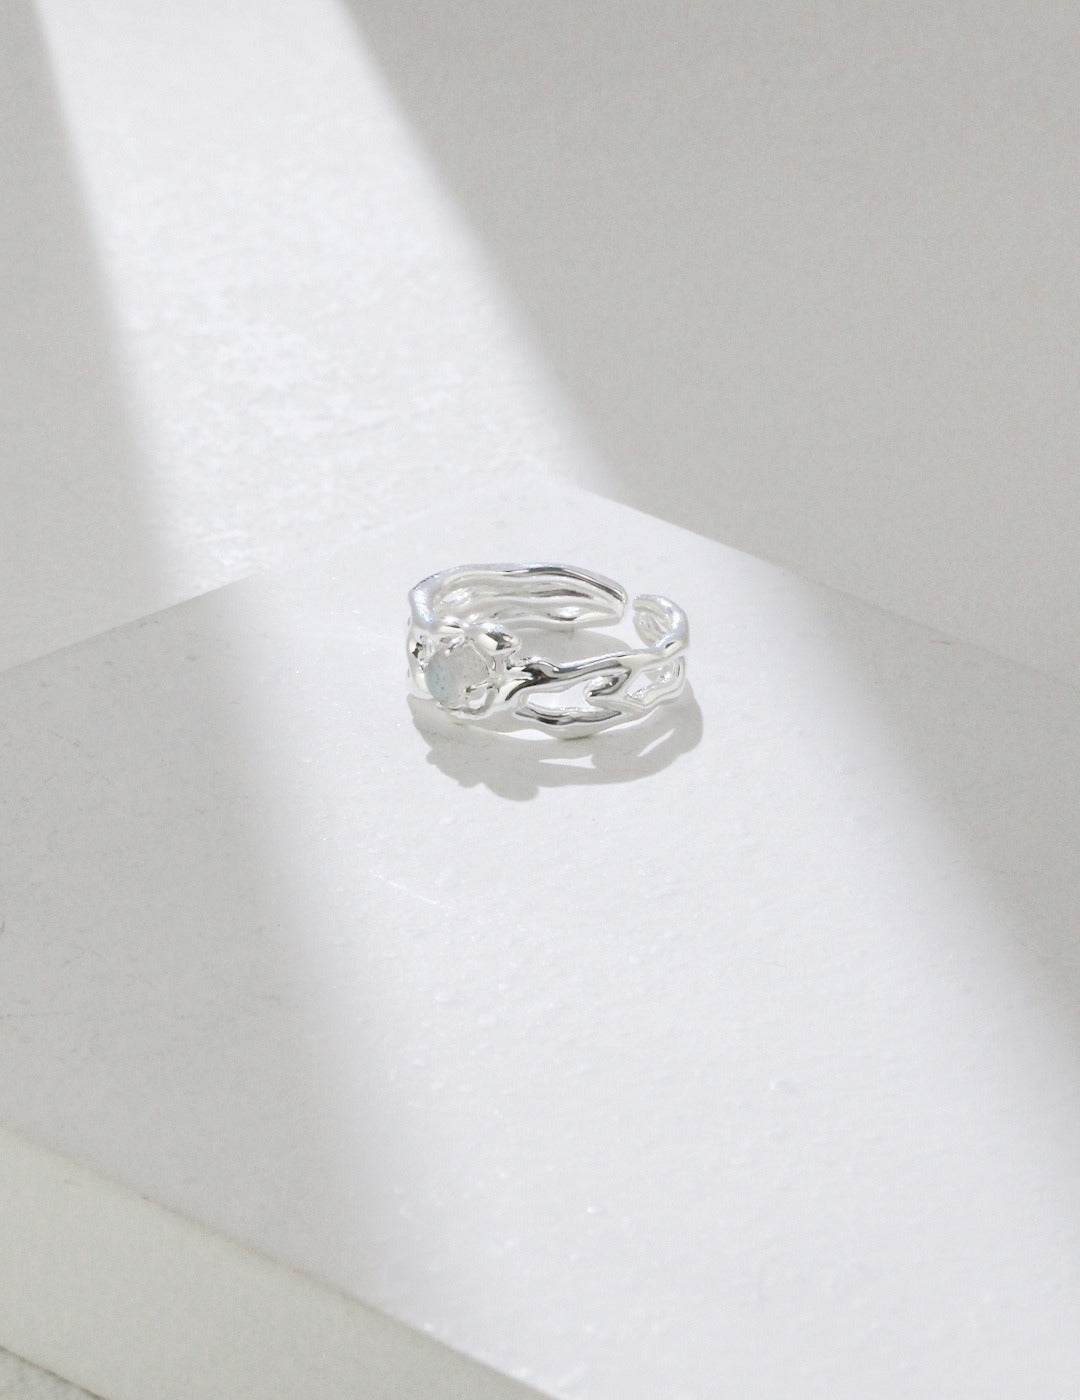 18k gold vermeil s925 fine silver moonstone ring